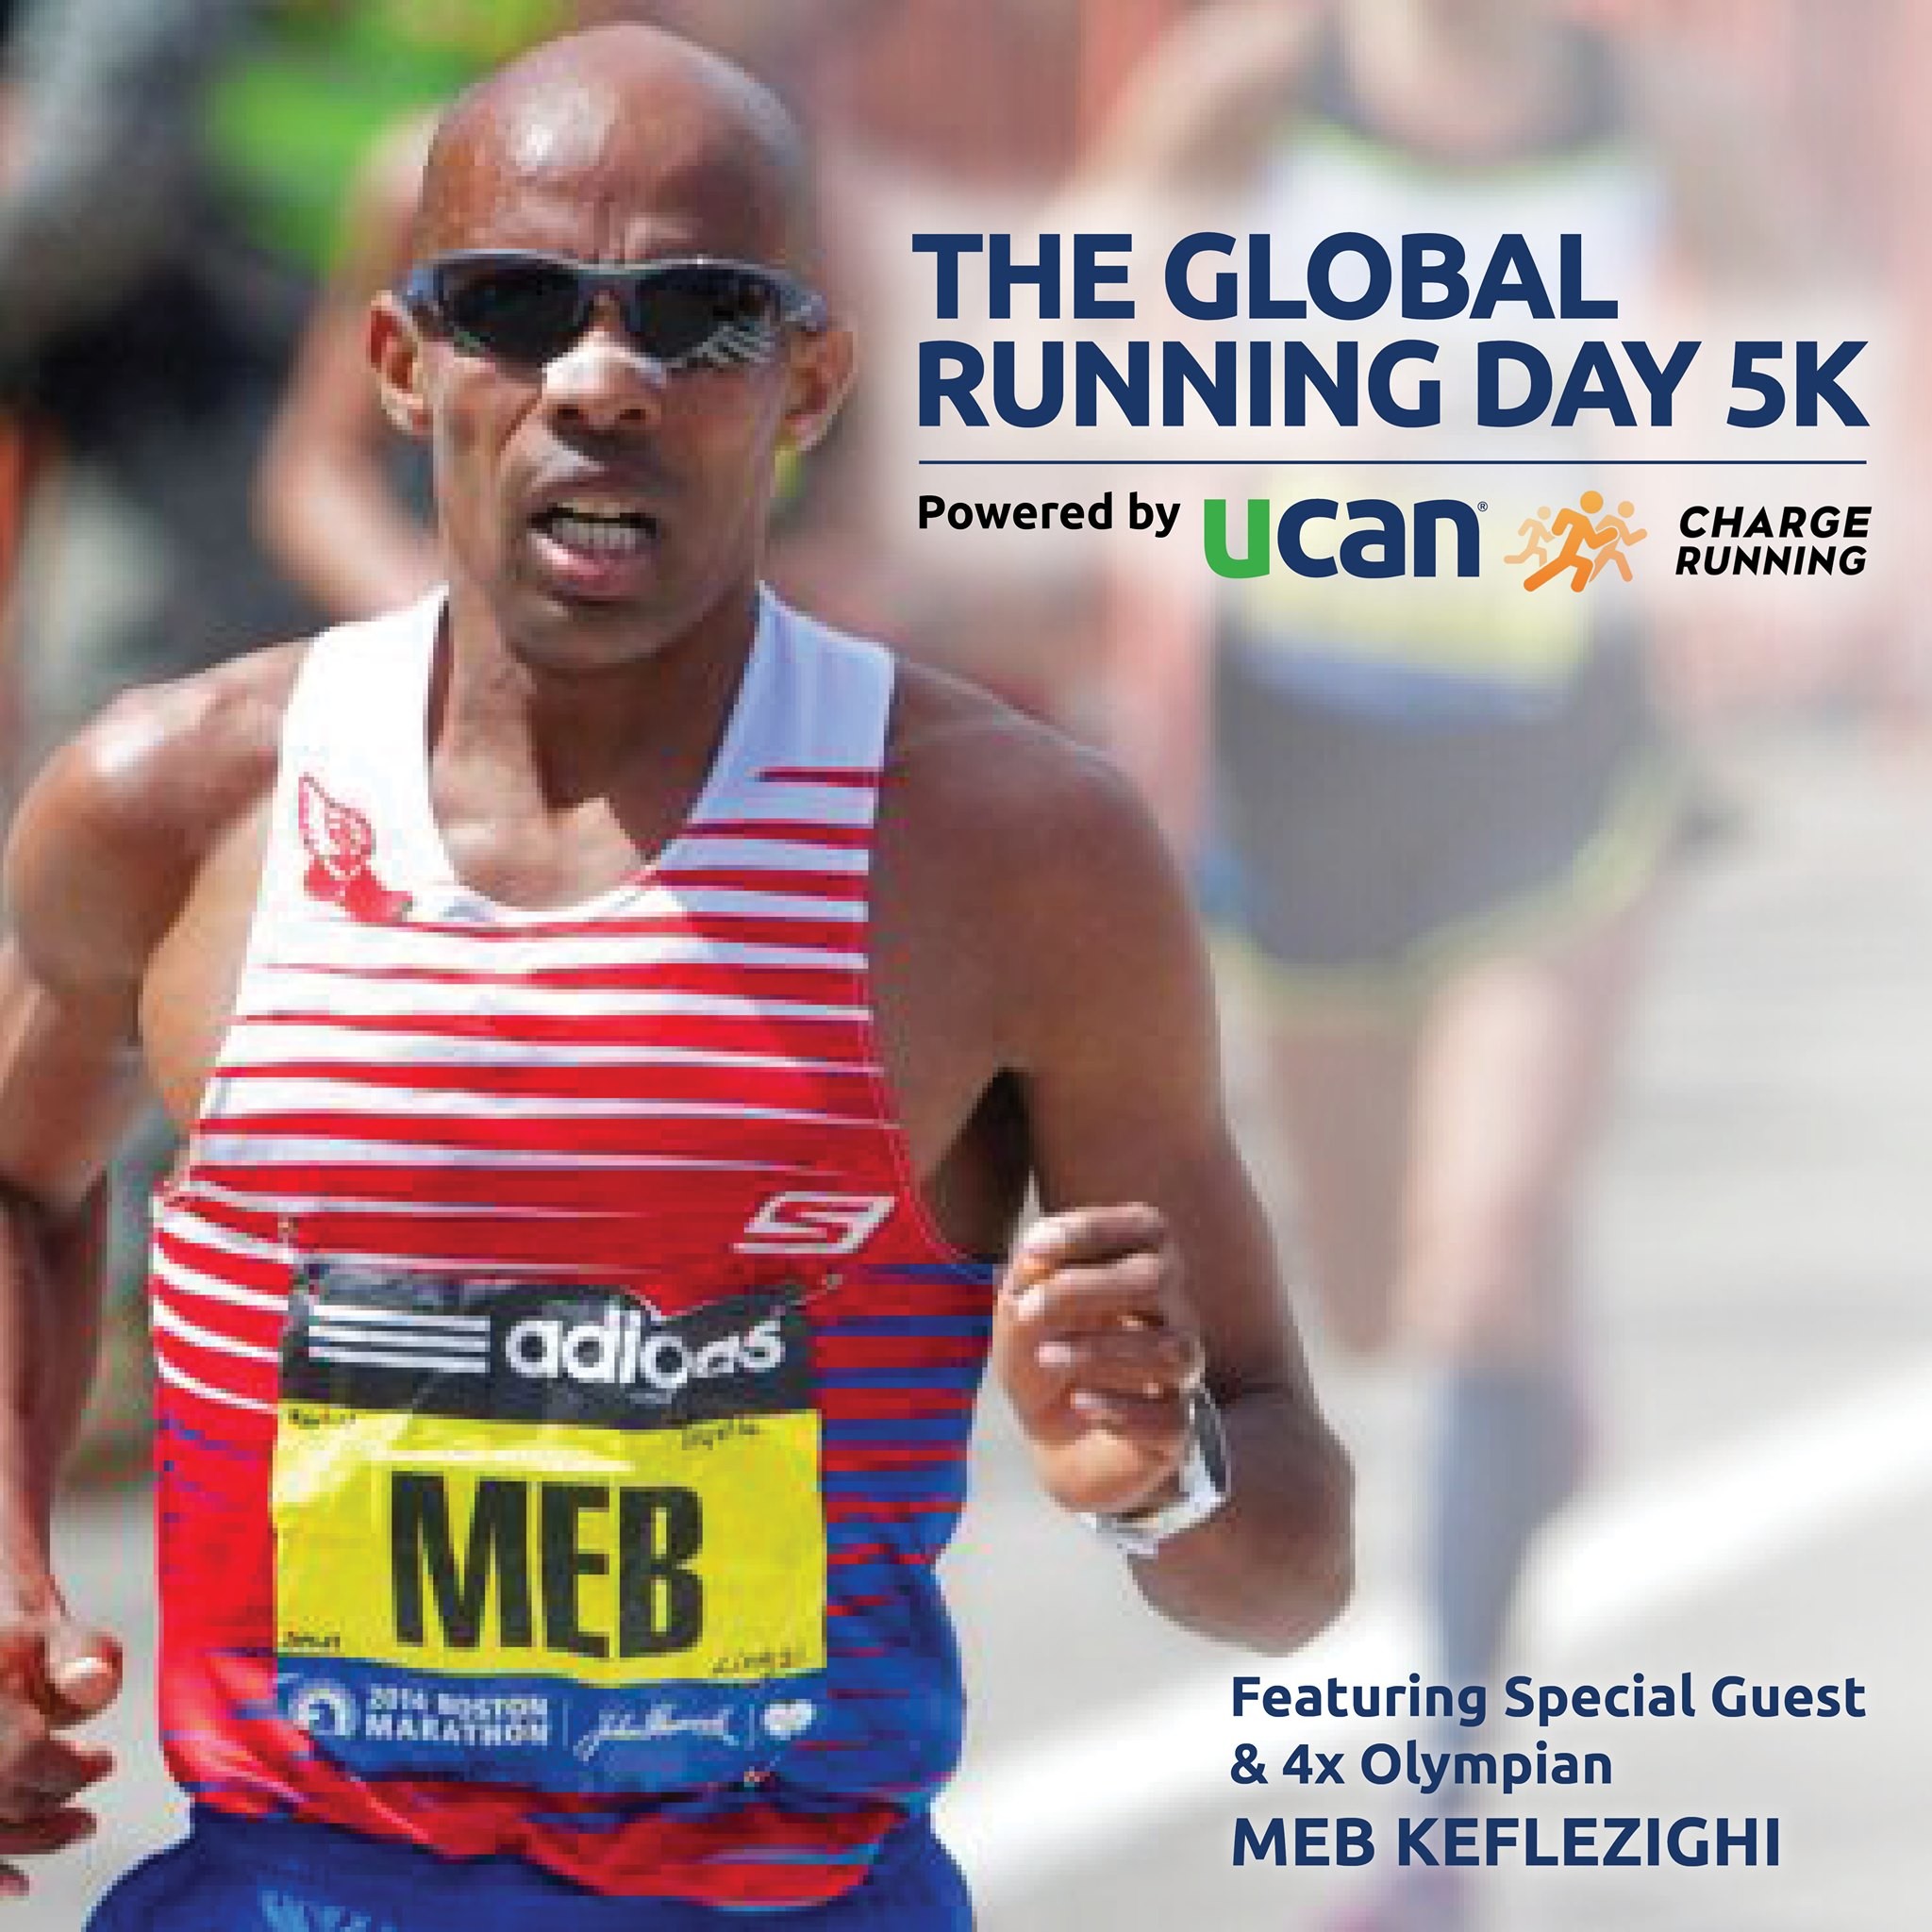 Run with 4x U.S. Olympian Meb Keflezighi on Global Running Day